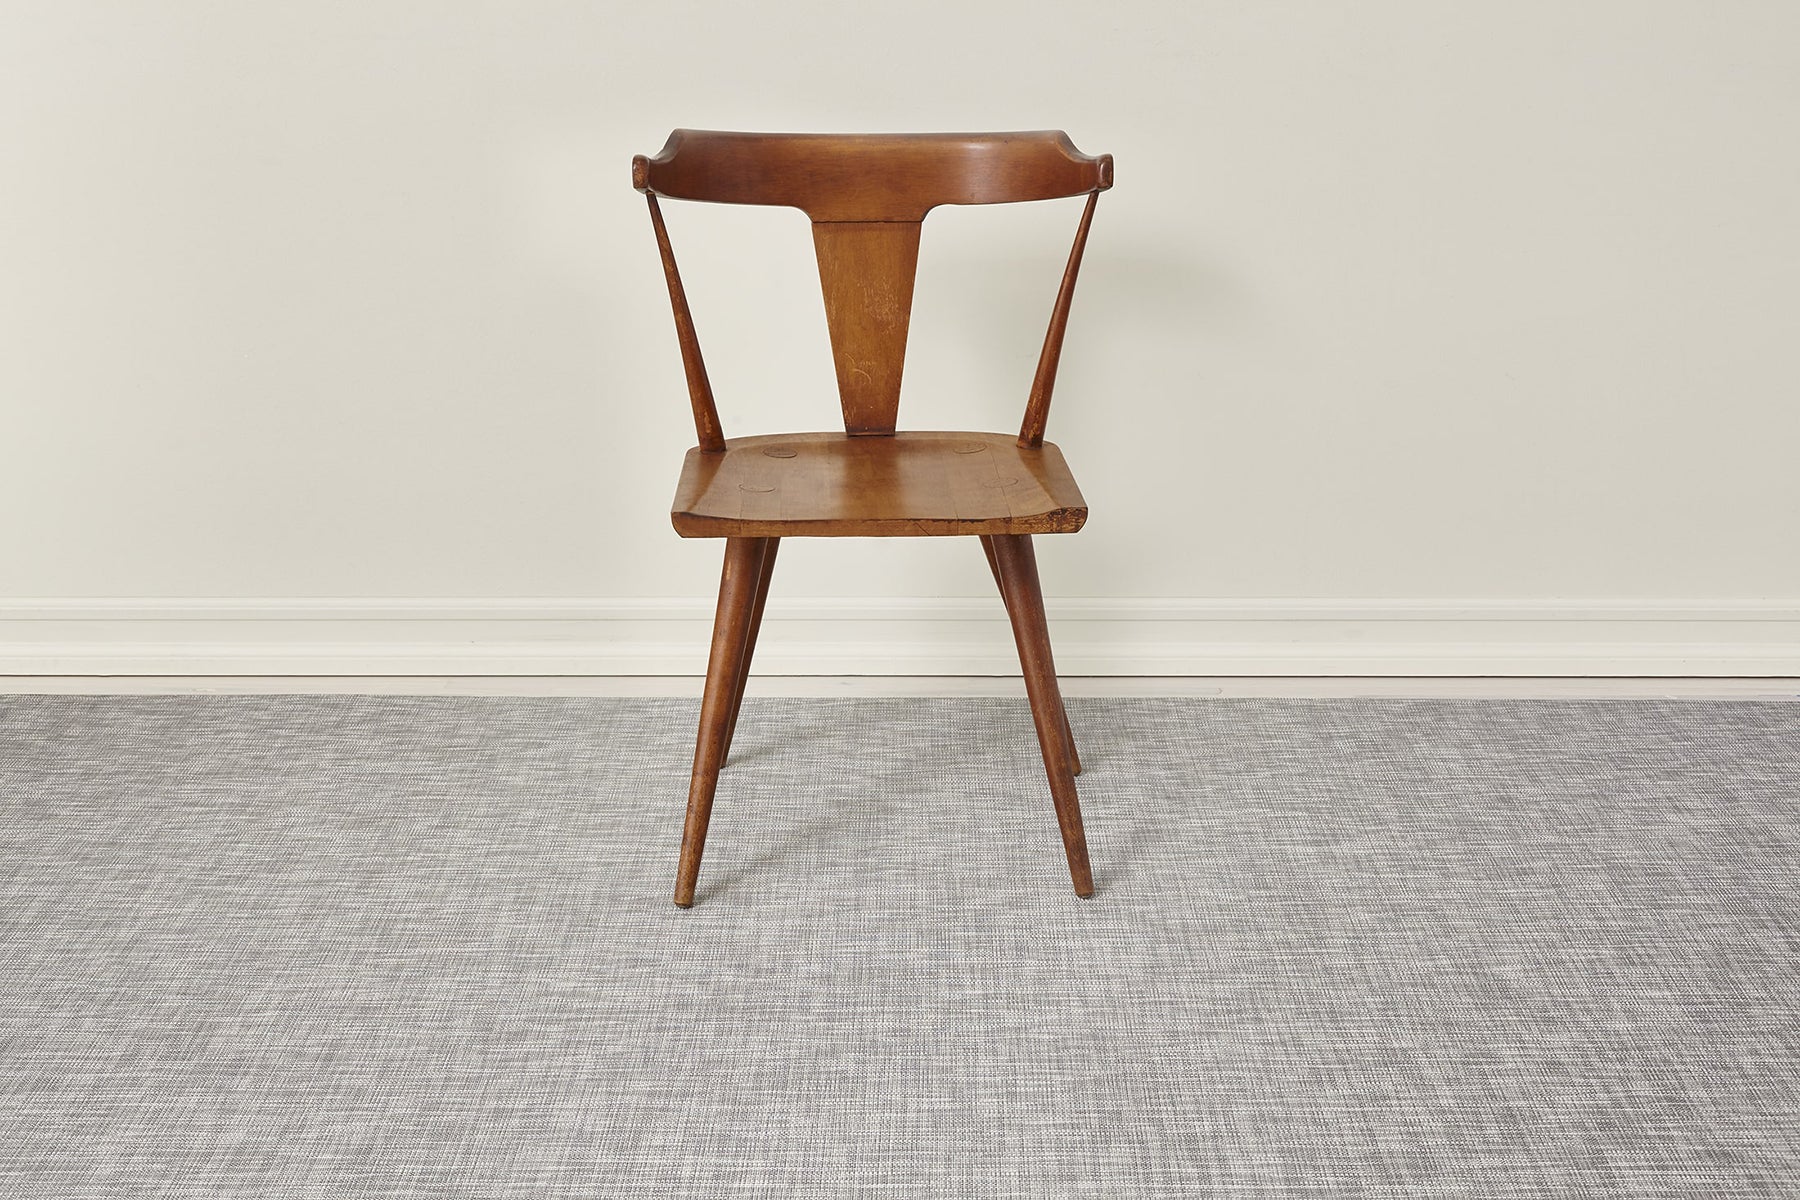 Ikat Woven Floor Mats - More Options